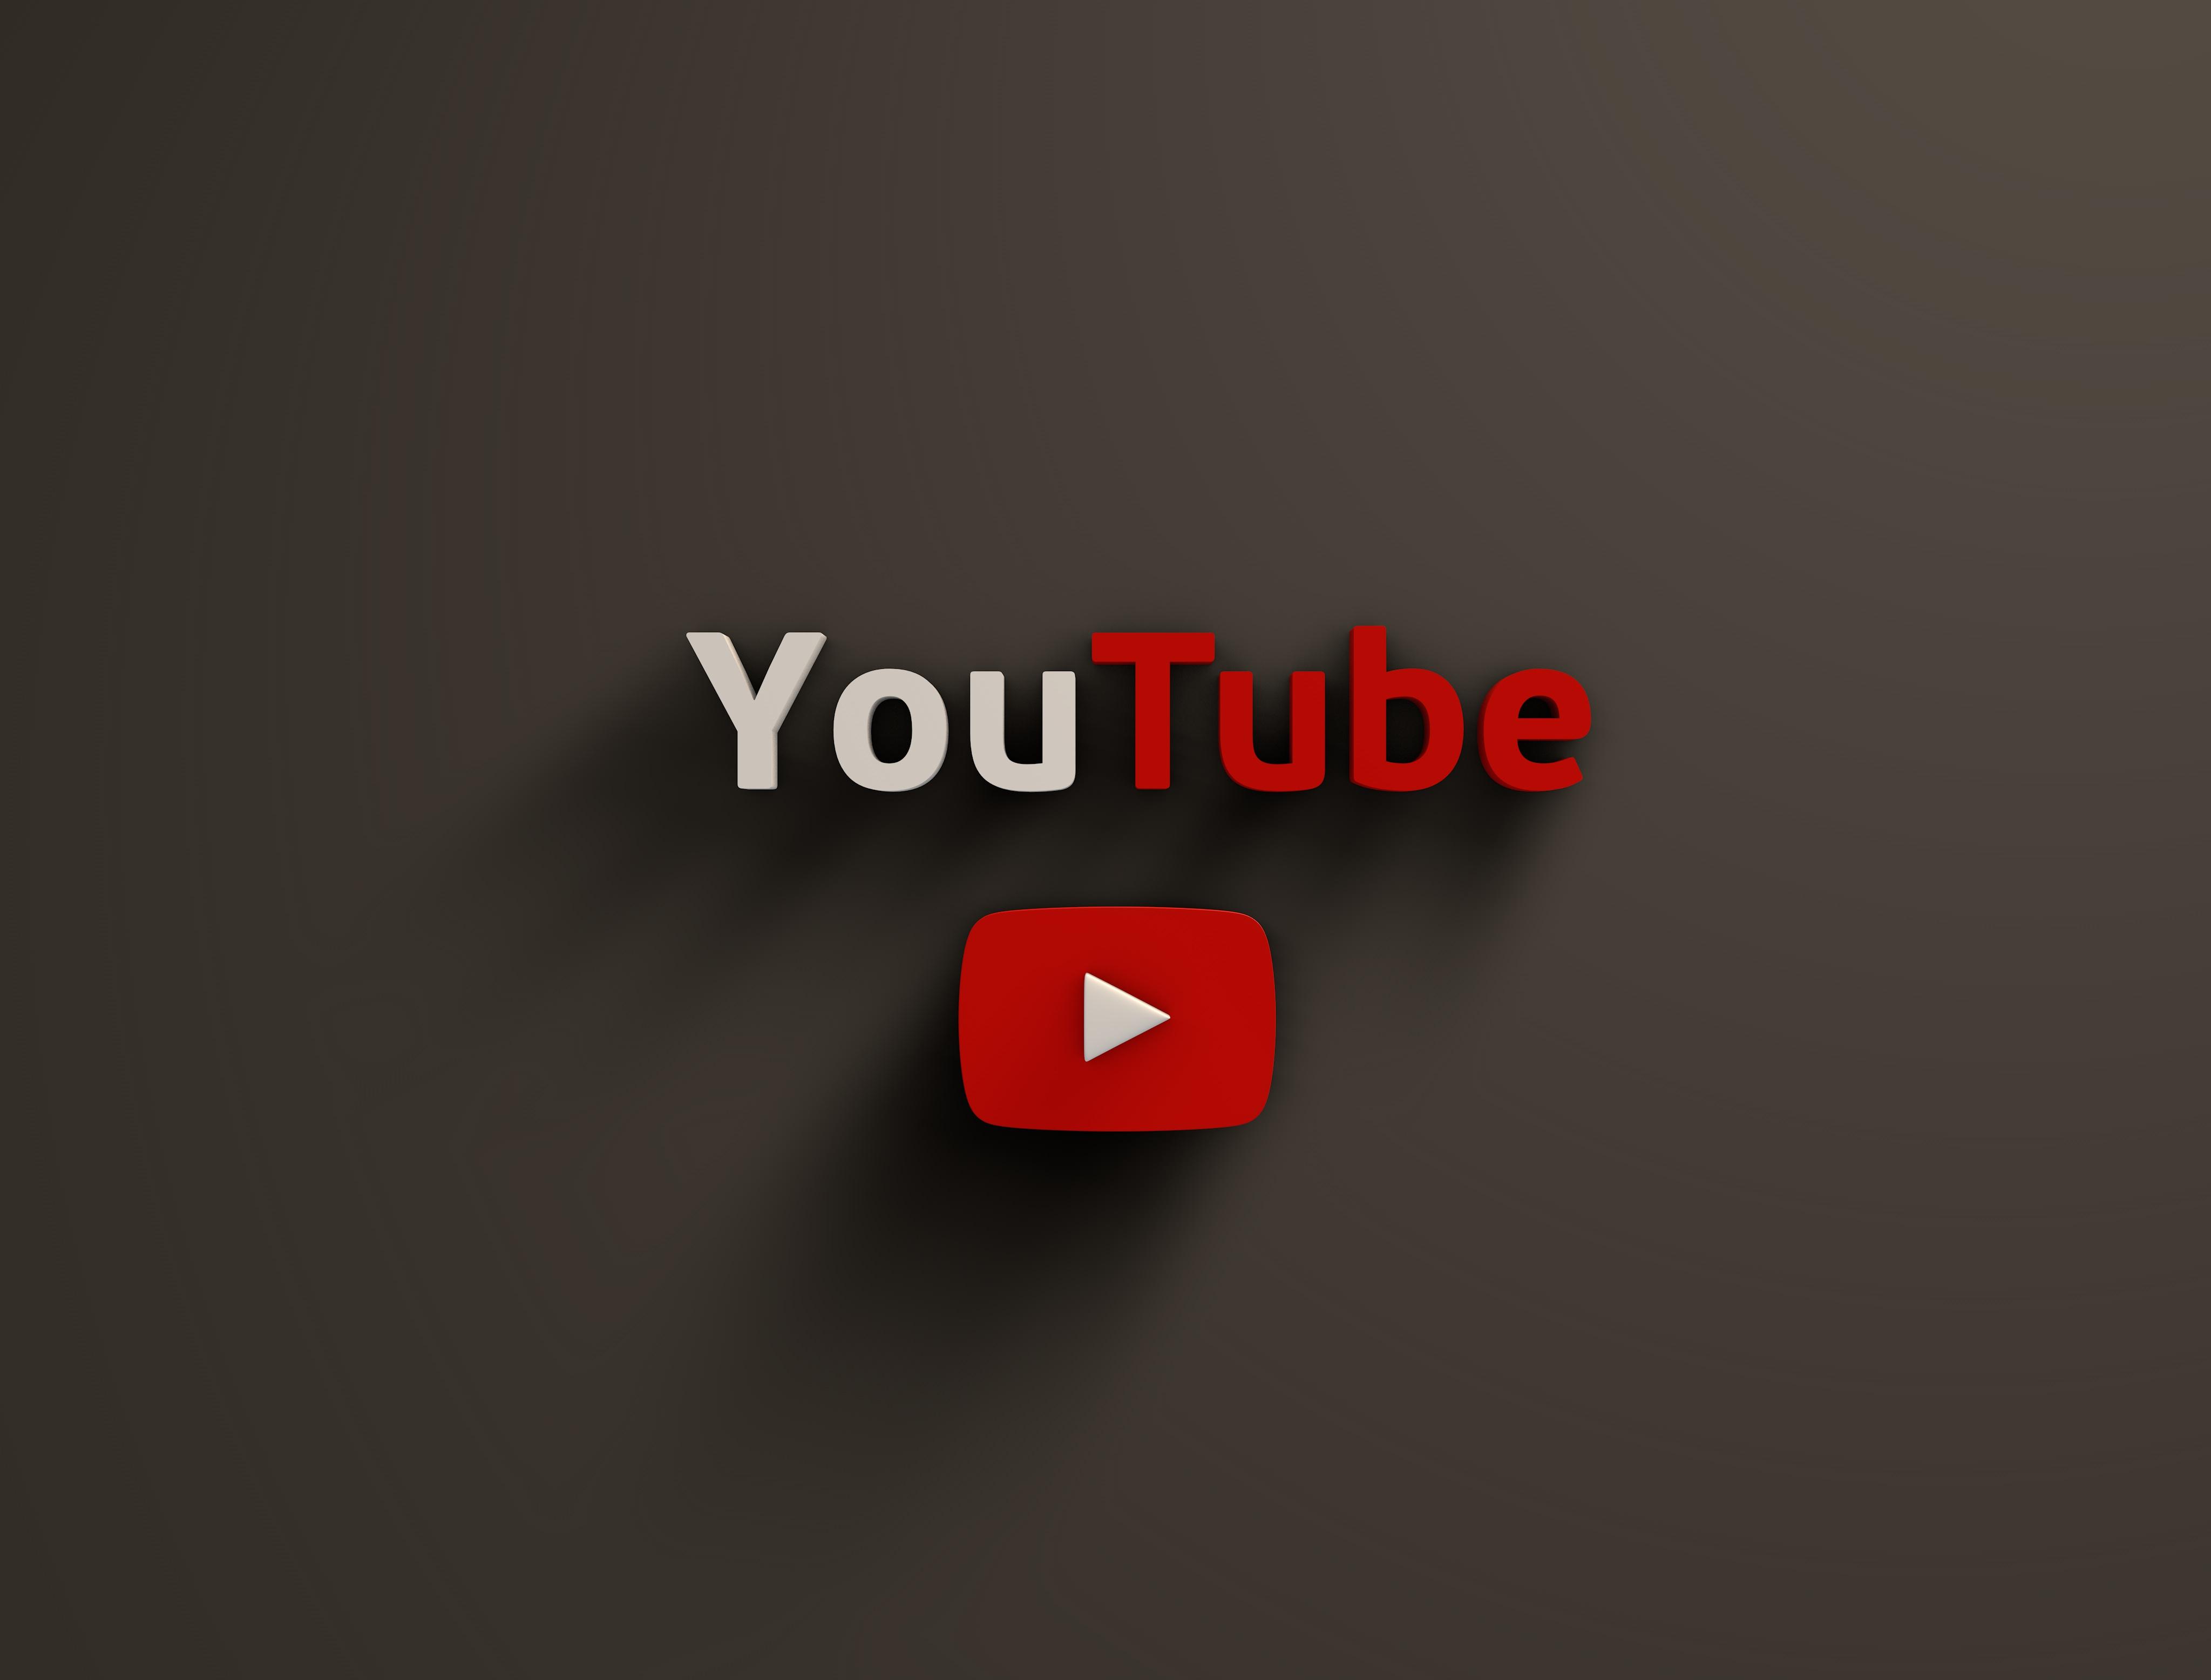 Youtube 4k Ultra HD Wallpapers